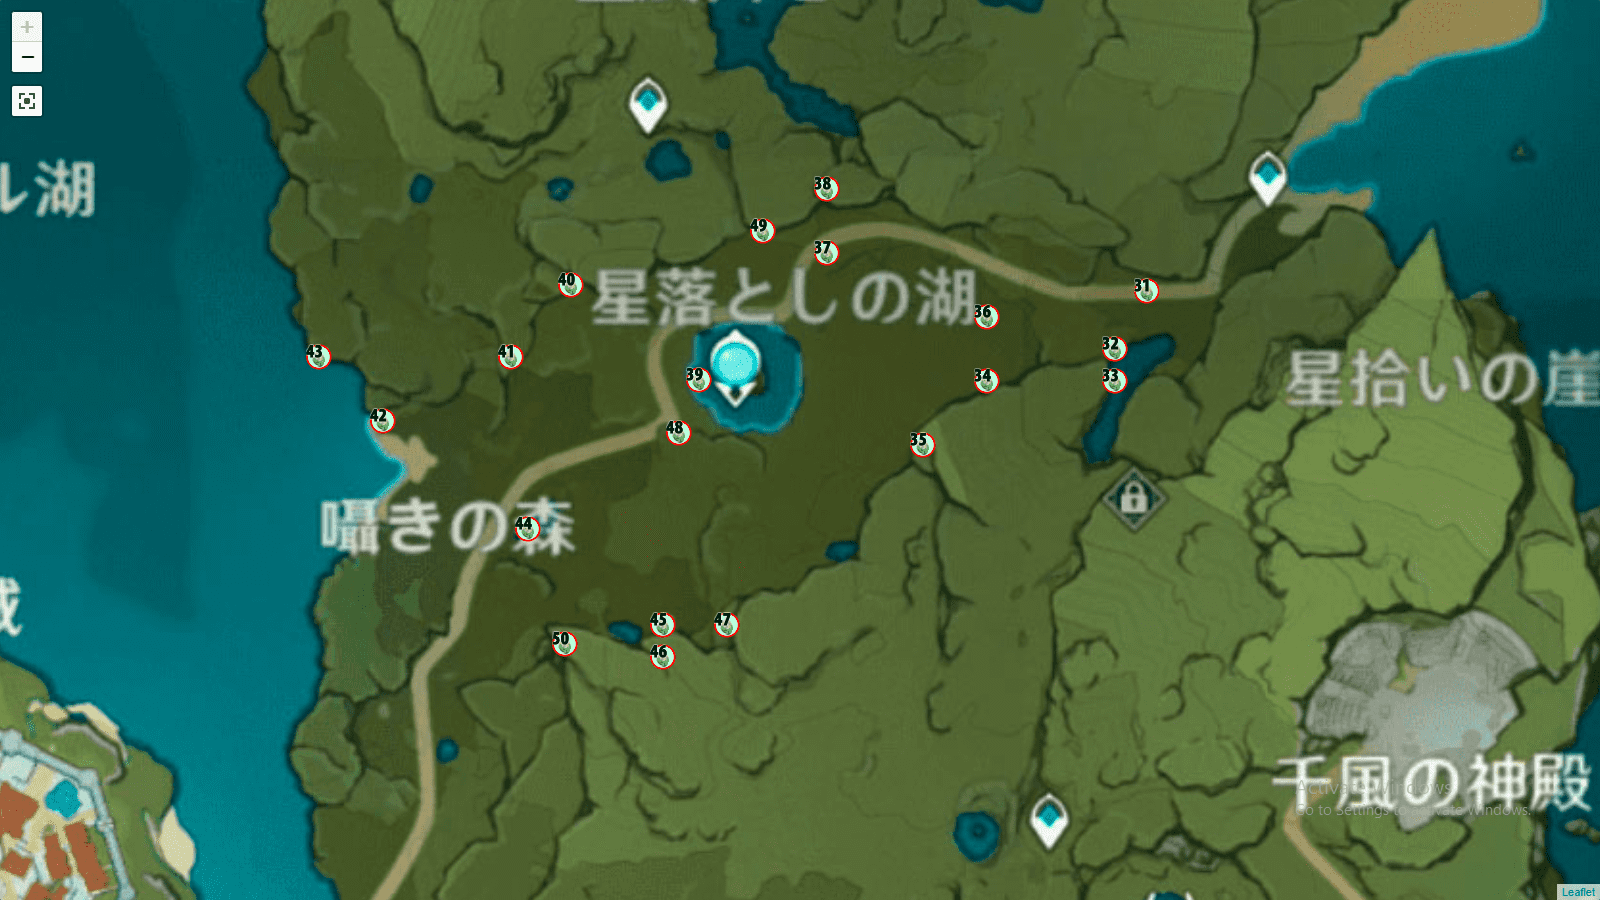 Genshin Impact Moonchase Location Map Day 4